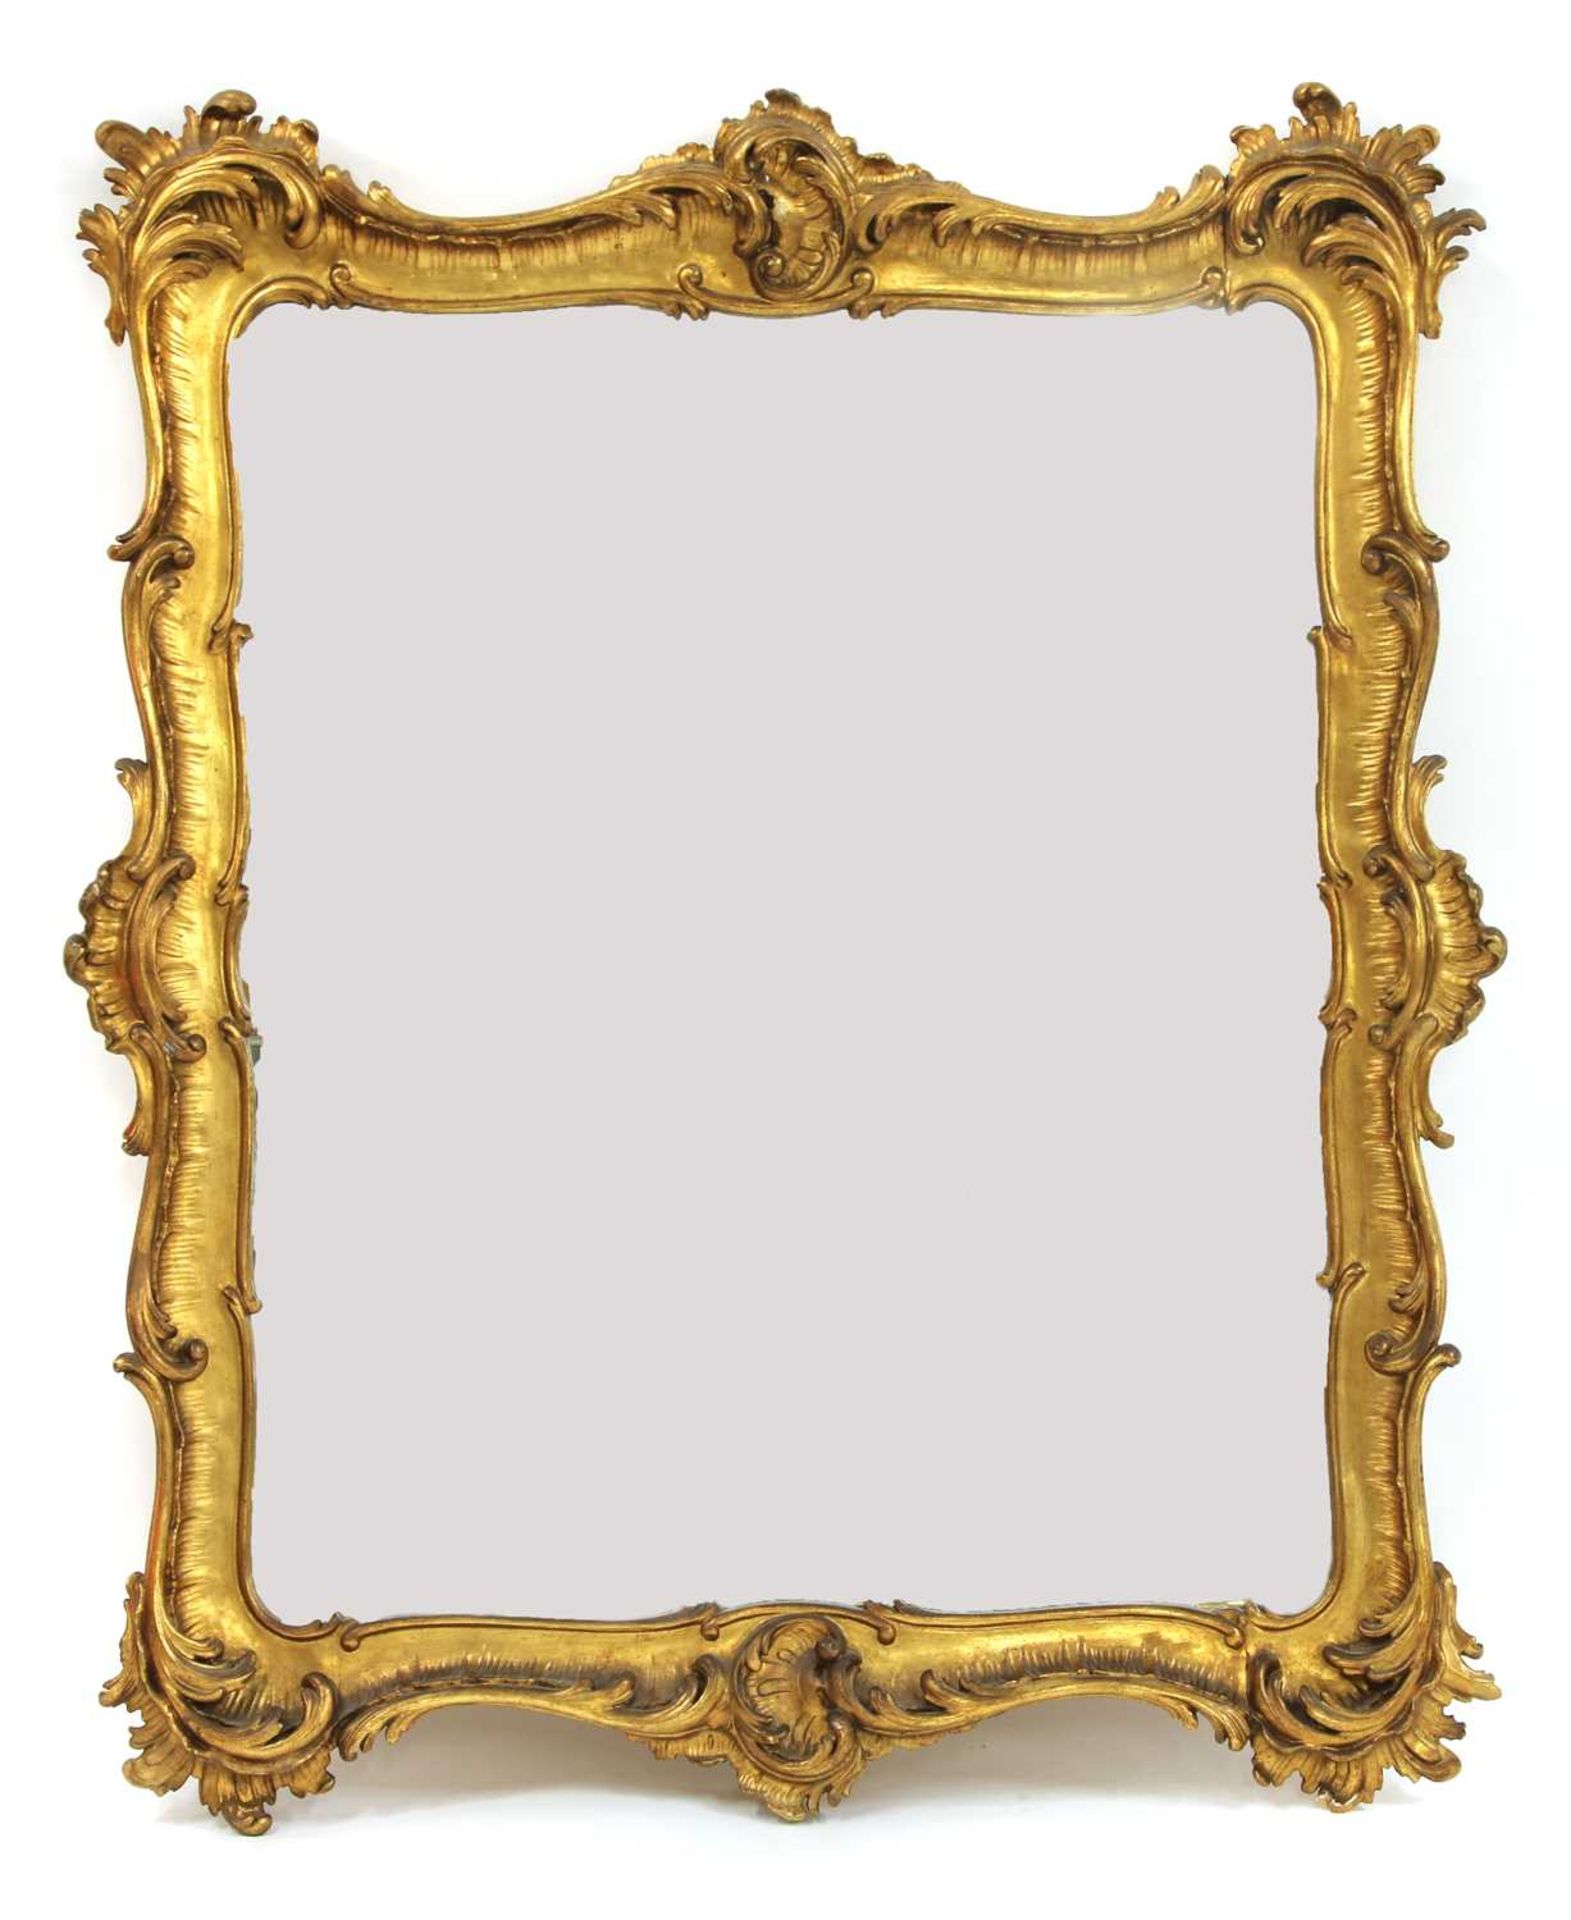 A gilt framed rectangular rococo style mirror